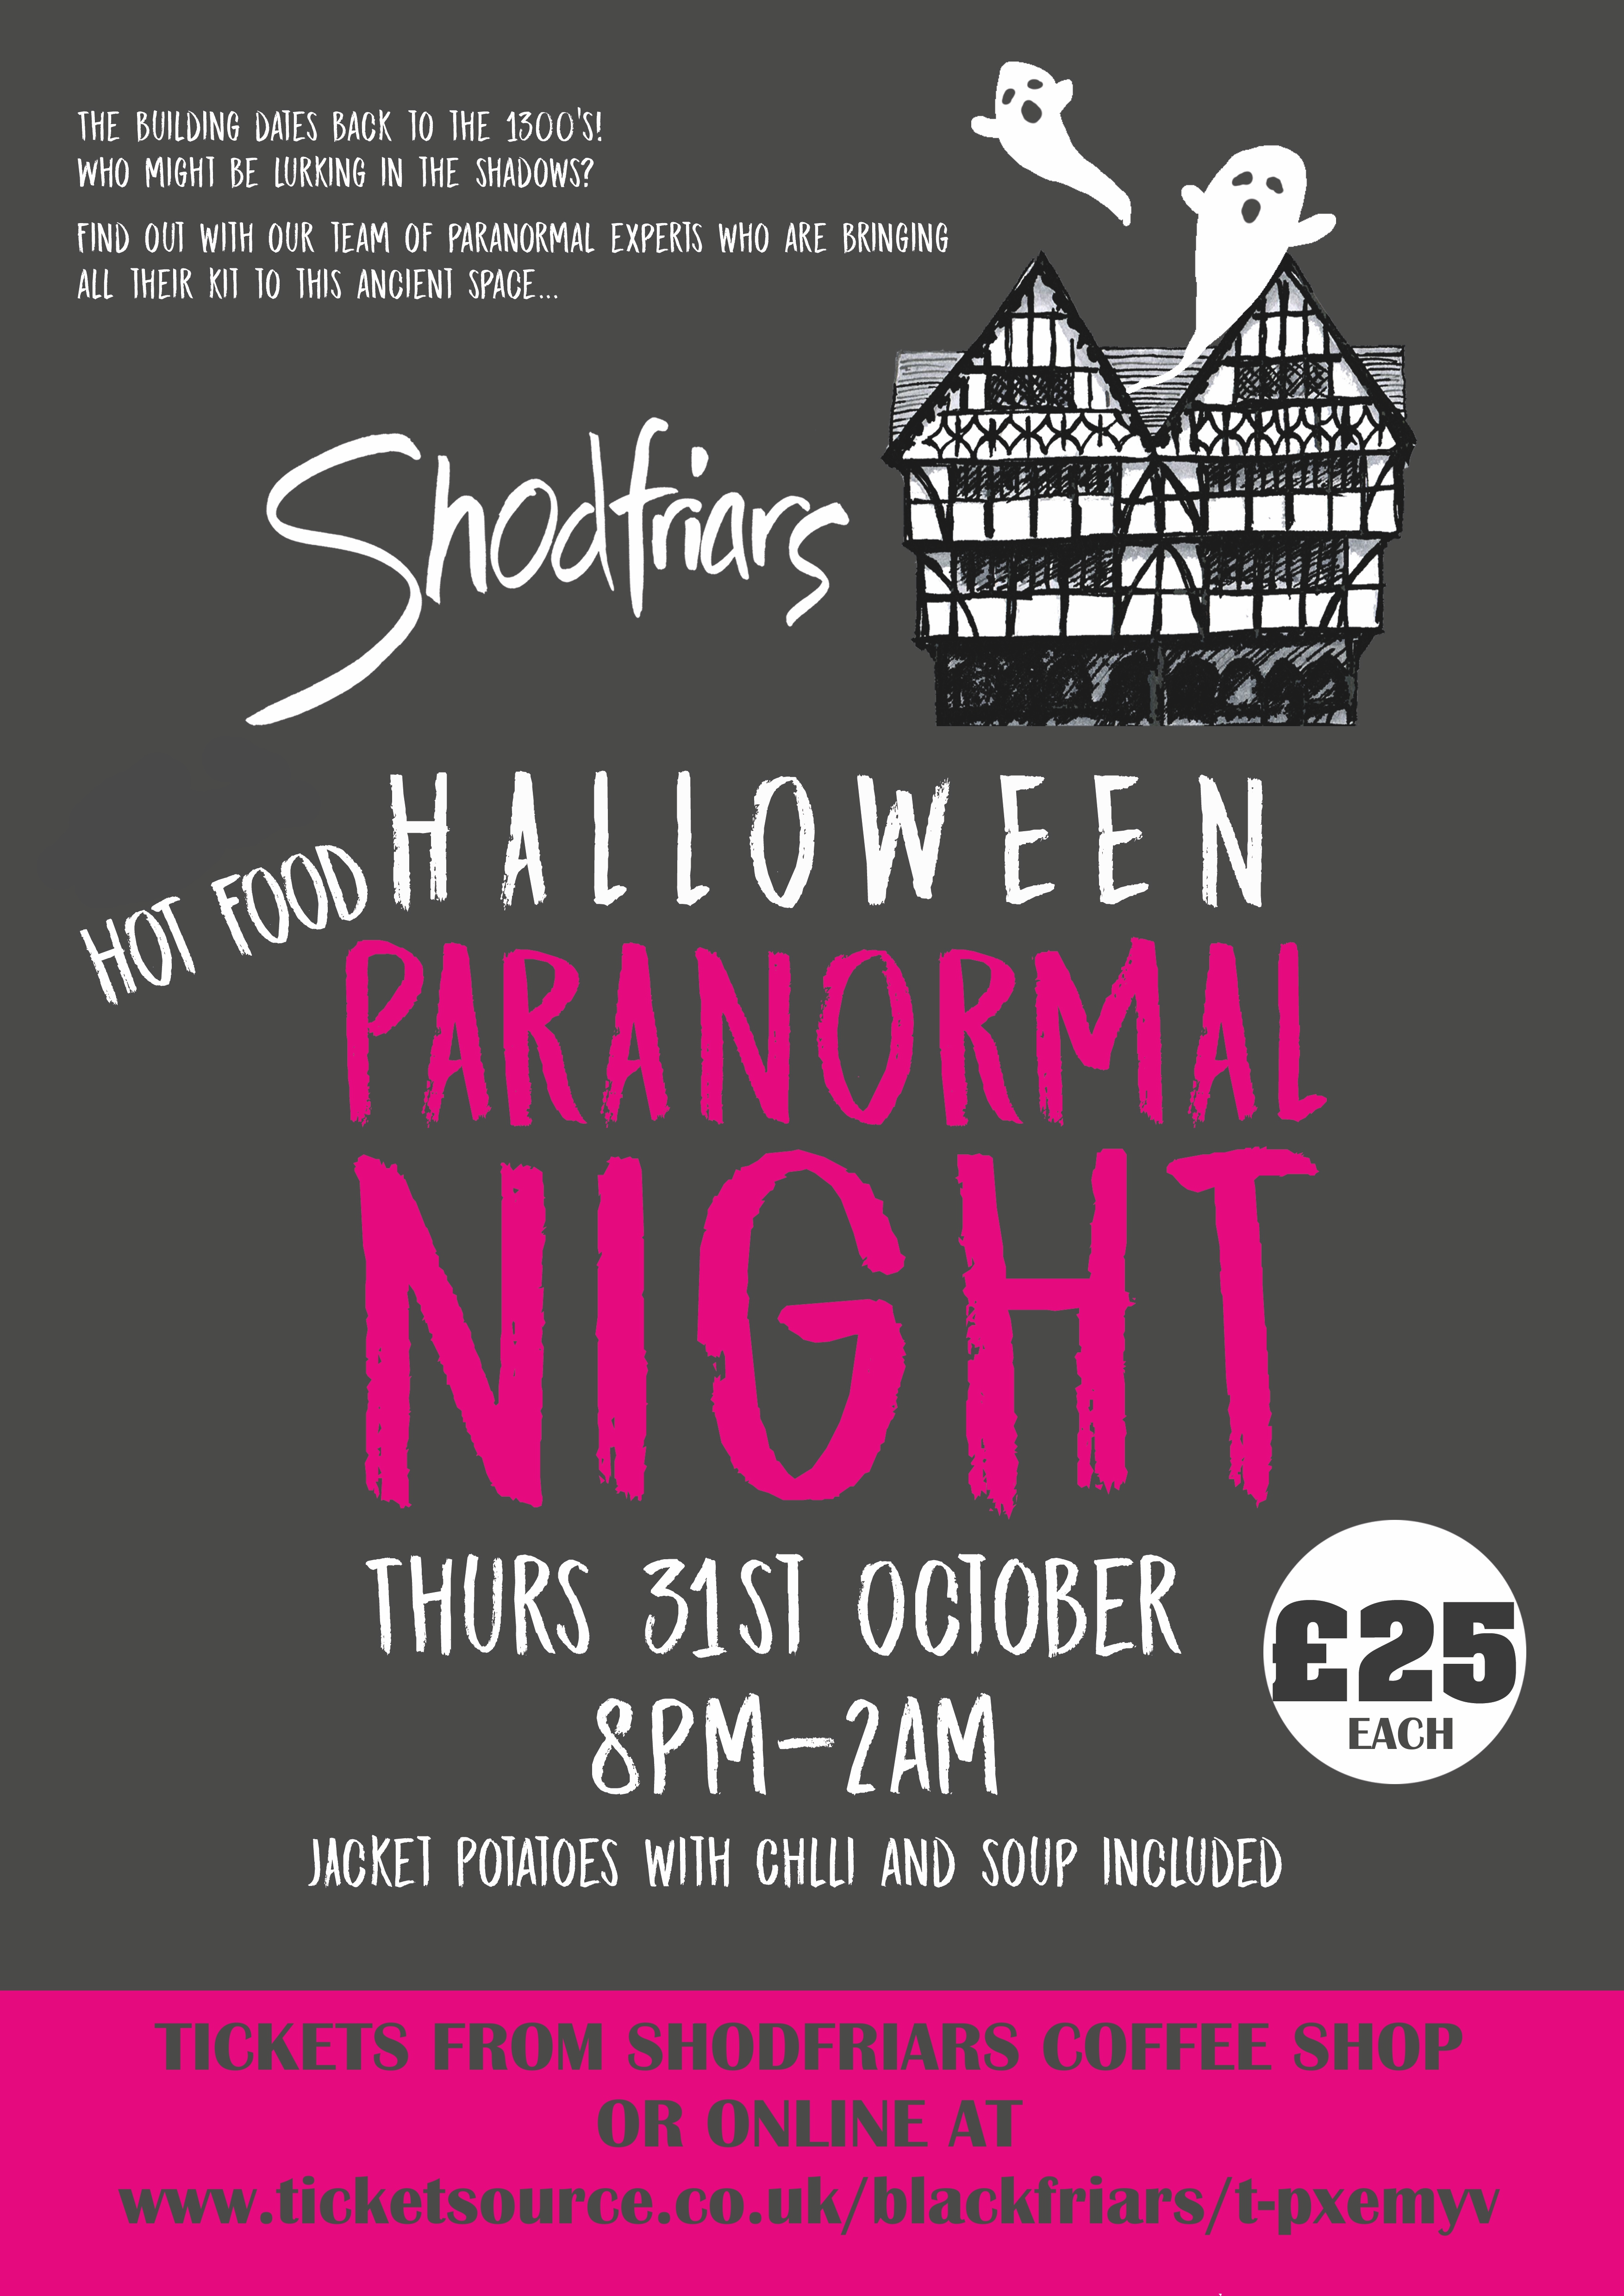 Halloween Paranormal Night at Shodfriars Hall 31st October